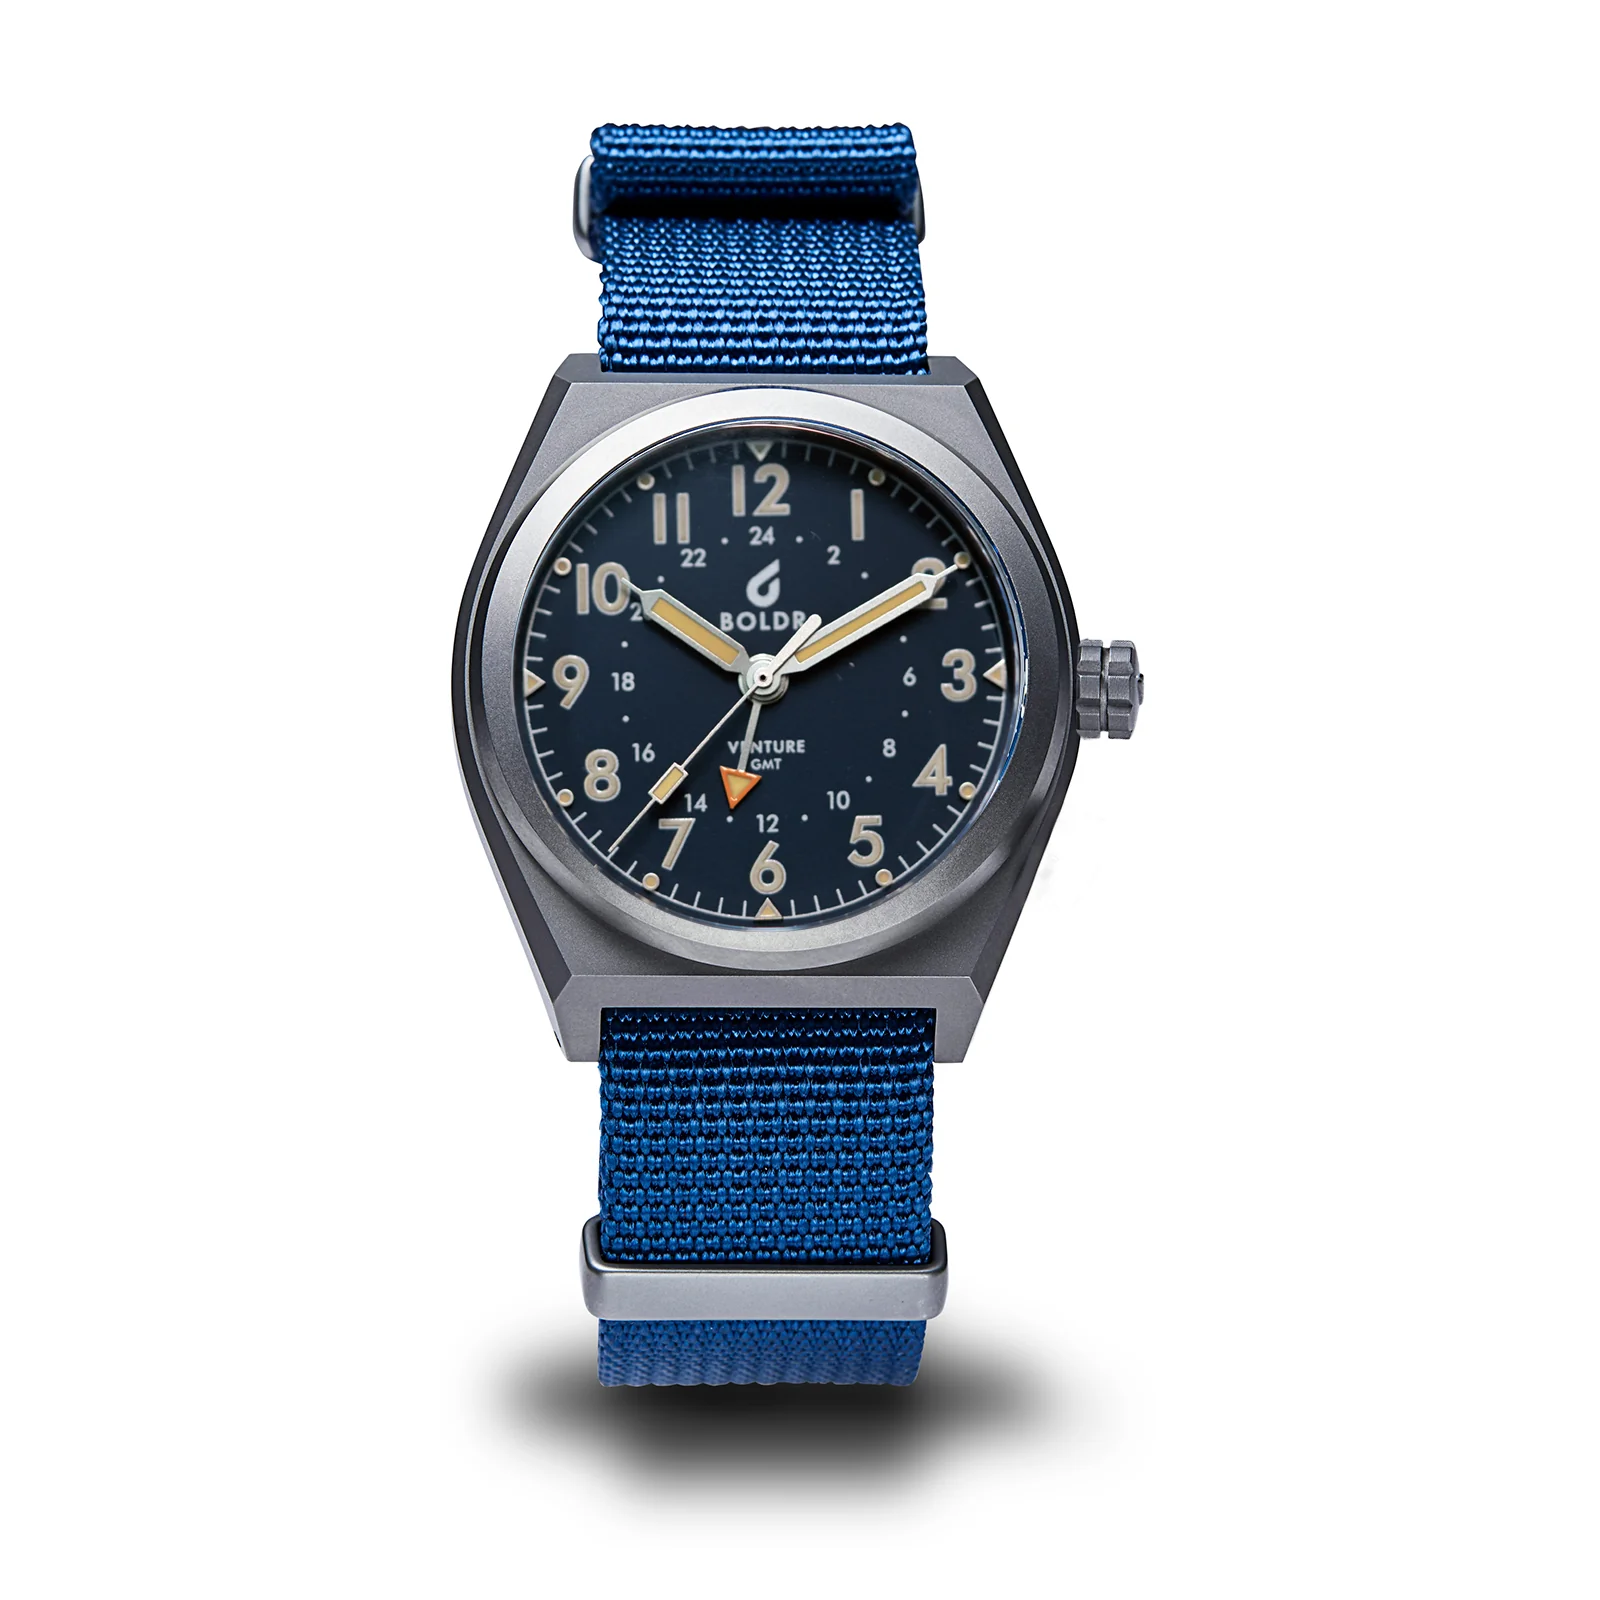 BOLDR Venture GMT Blue automatic watch